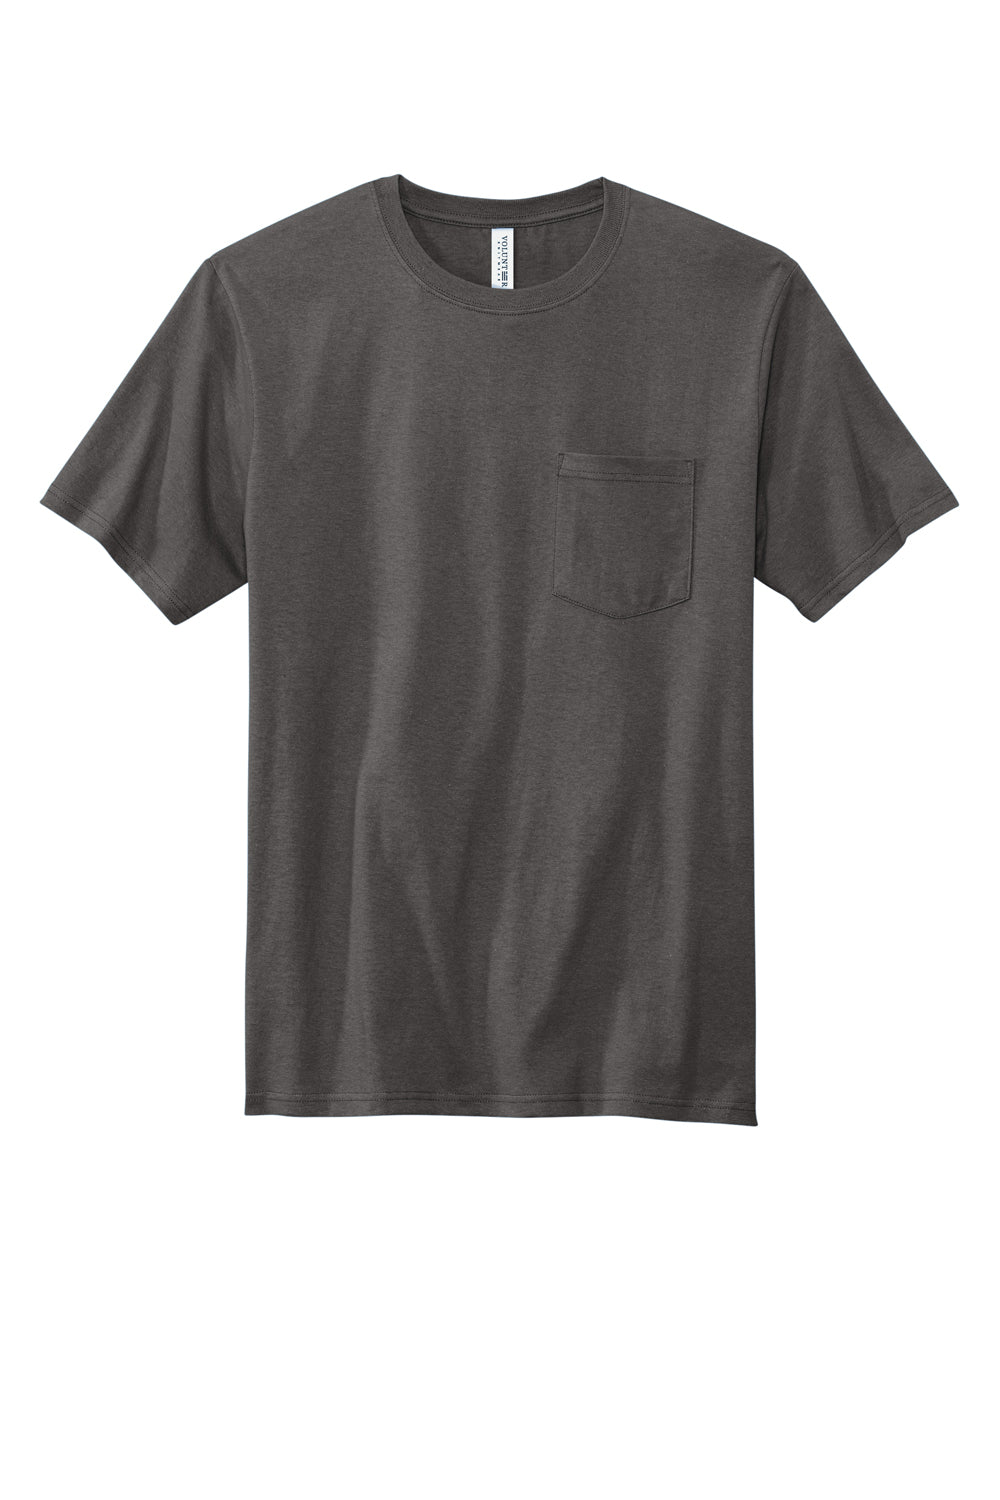 Volunteer Knitwear VL100P USA Made All American Short Sleeve Crewneck T-Shirt w/ Pocket Steel Grey Flat Front